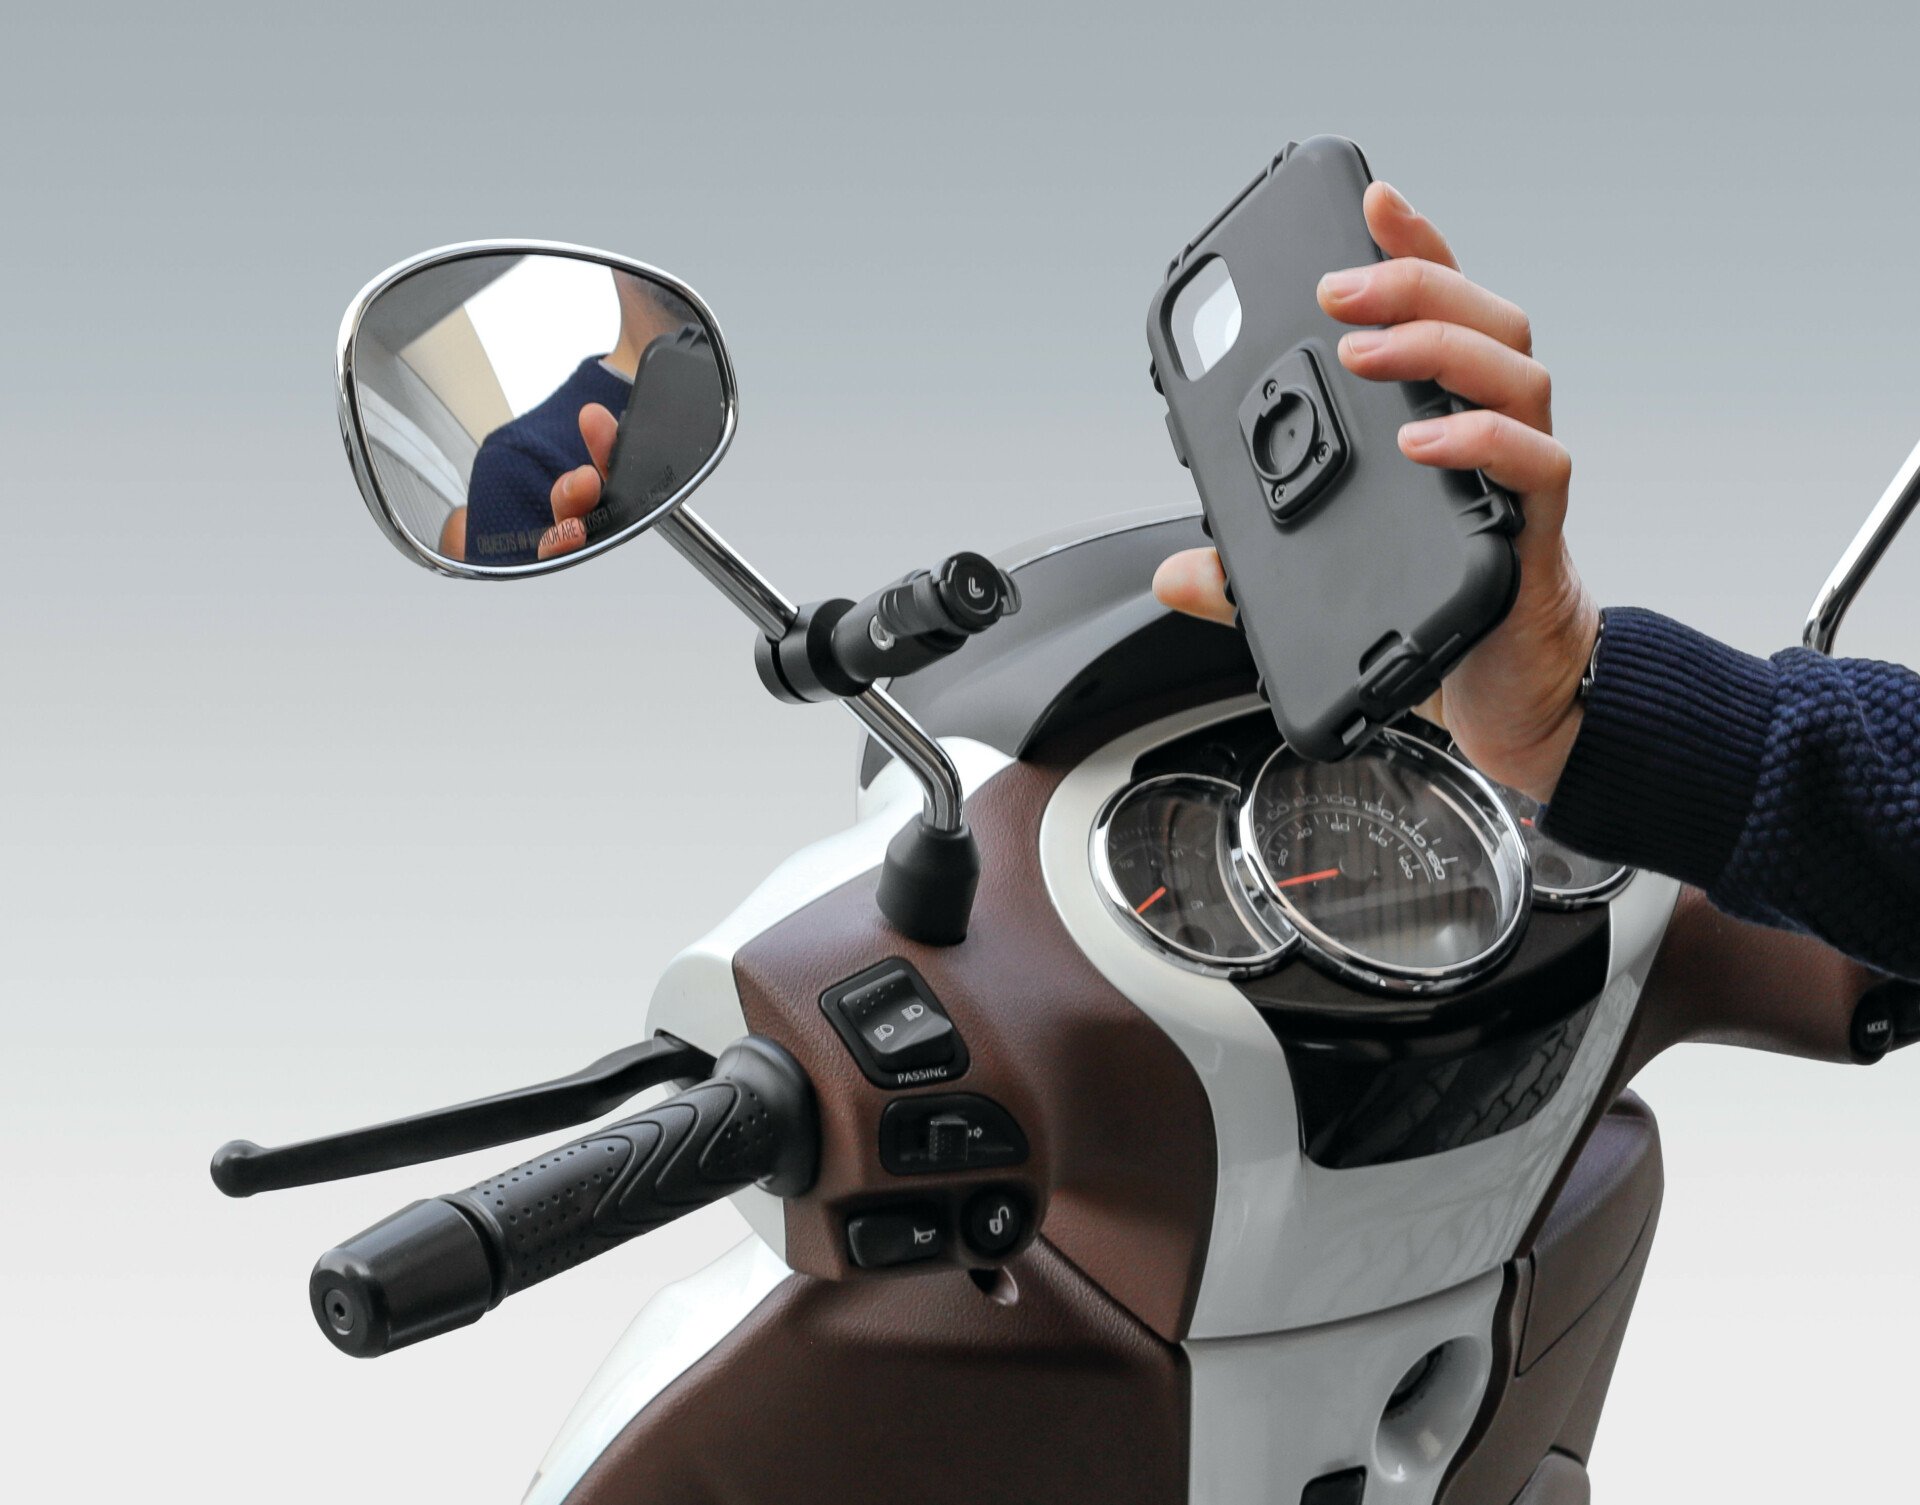 Suport fixare pe oglinzile retrovizoare Opti Mirror pentru carcase telefon mobil Opti Case thumb